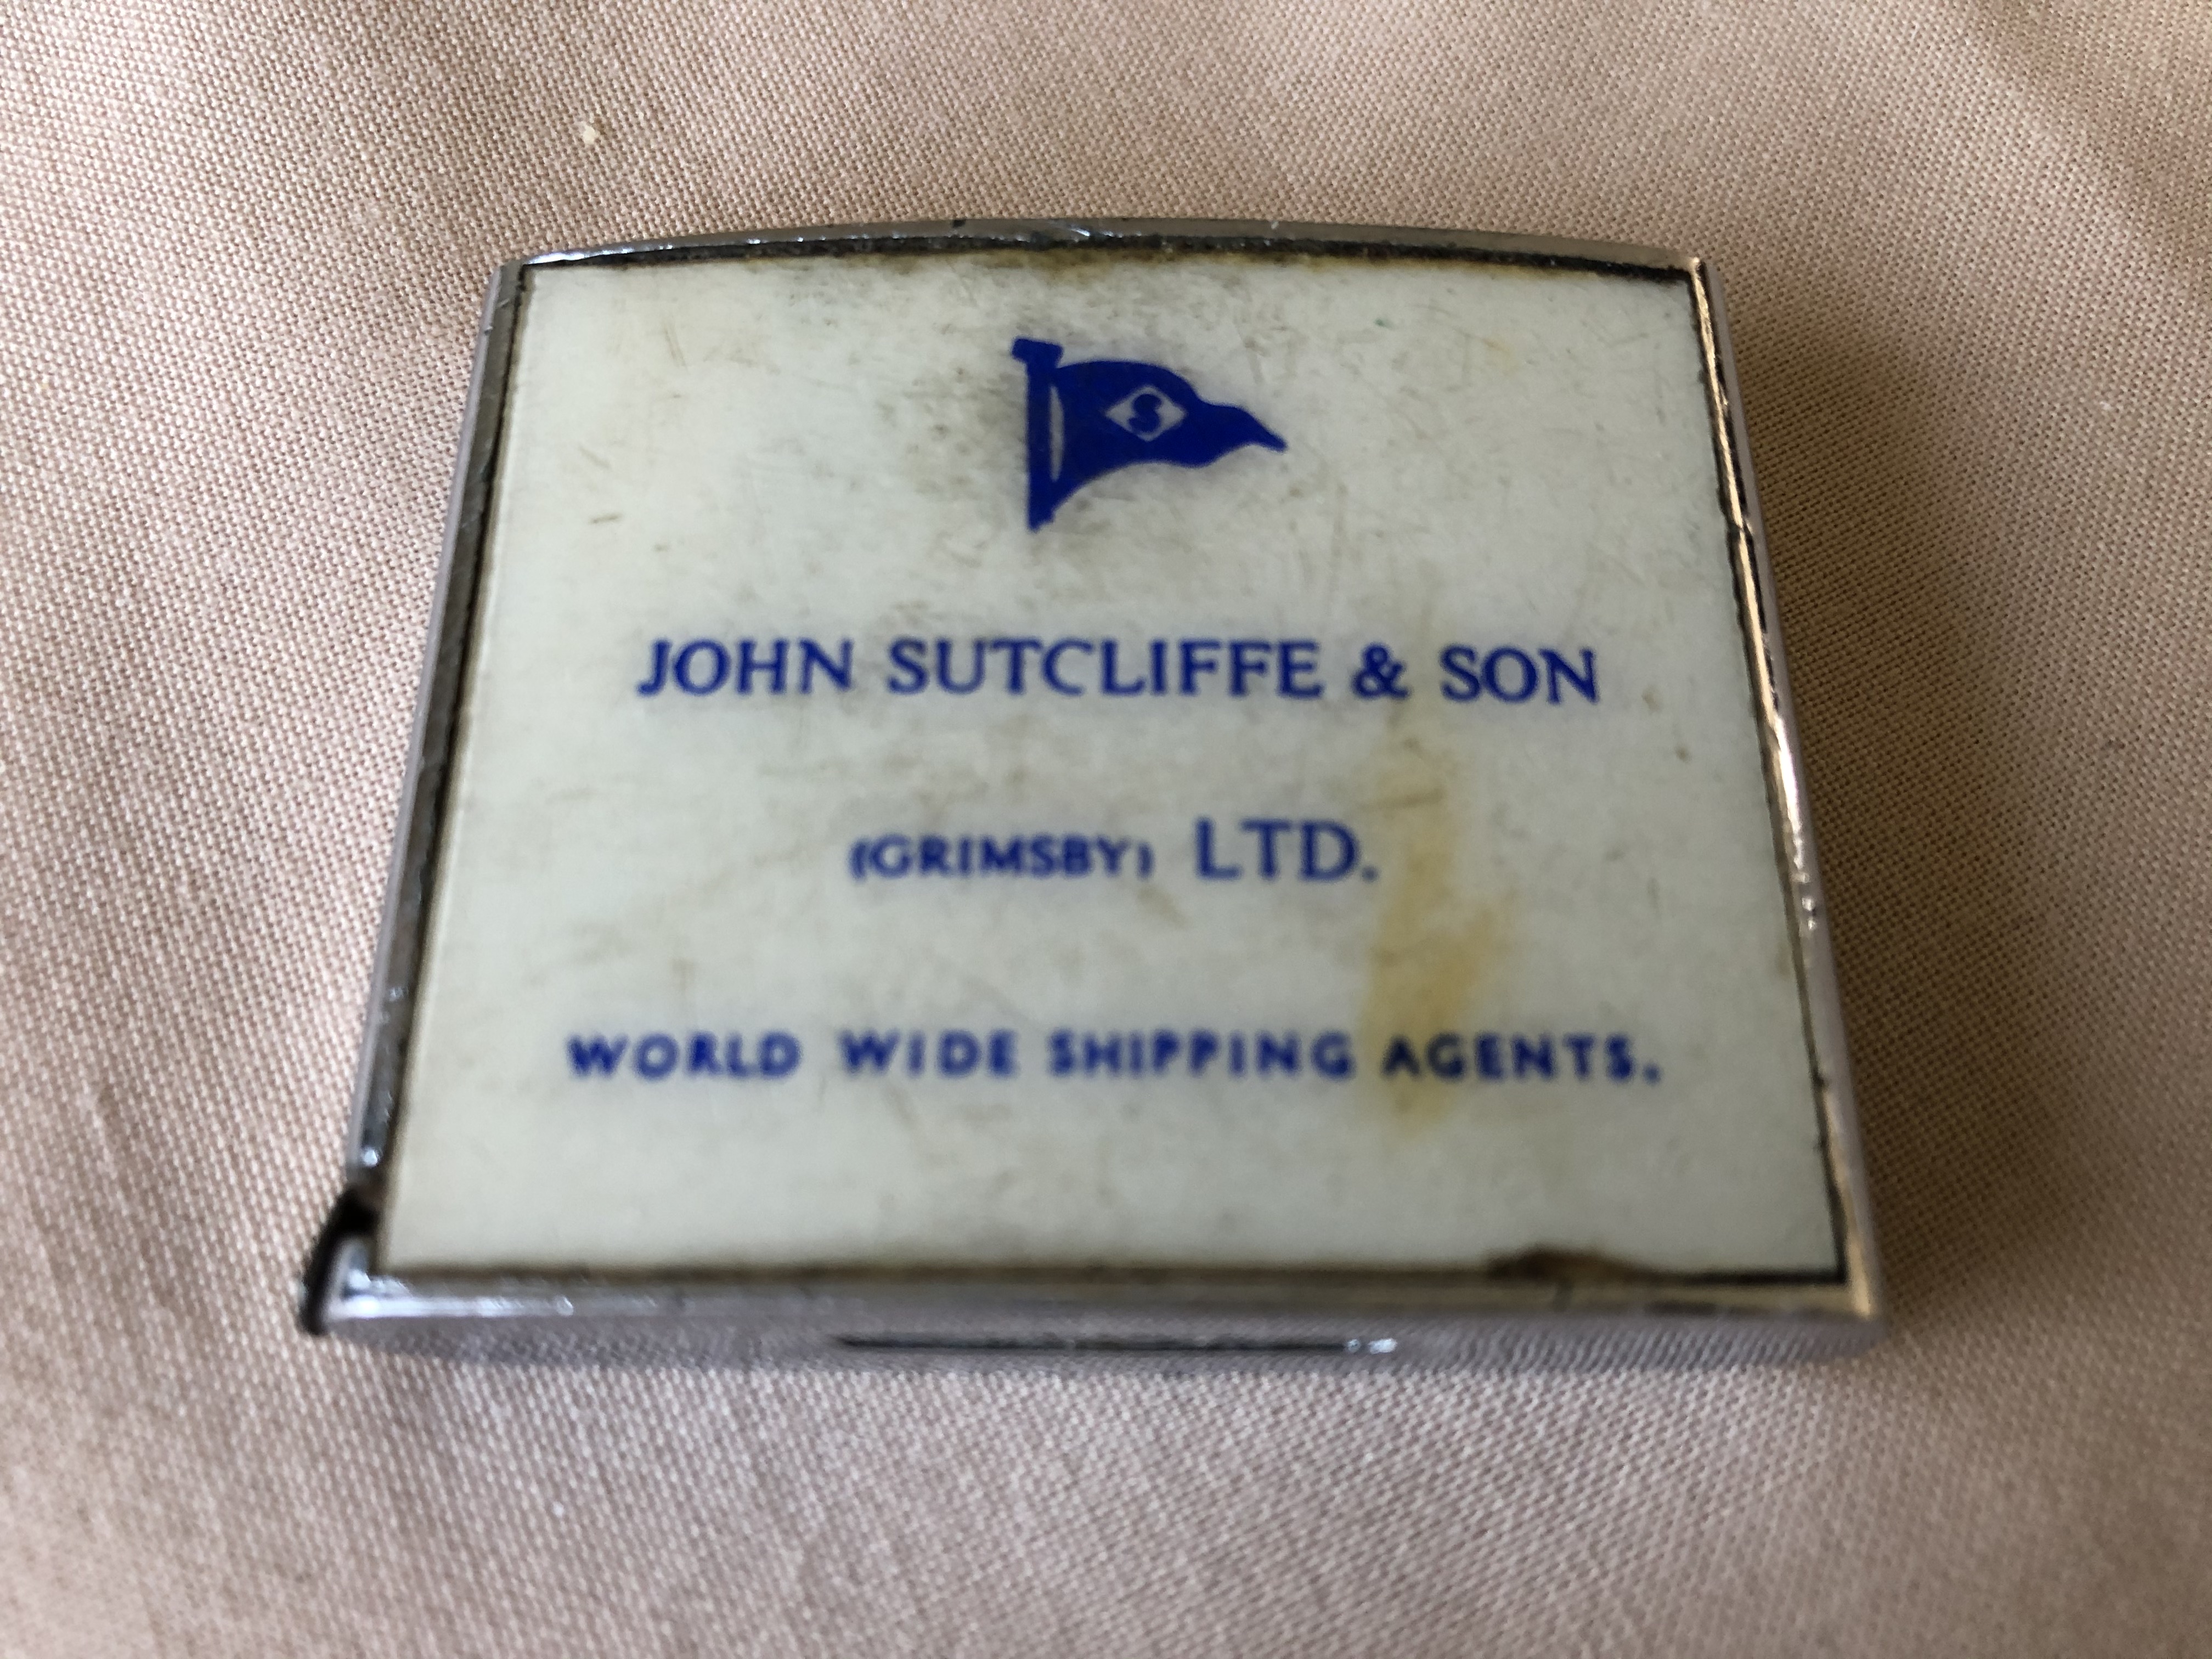 SOUVENIR MINIATURE TAPE MEASURE FROM THE SHIPPING COMPANY JOHN SUTCLIFFE & SON